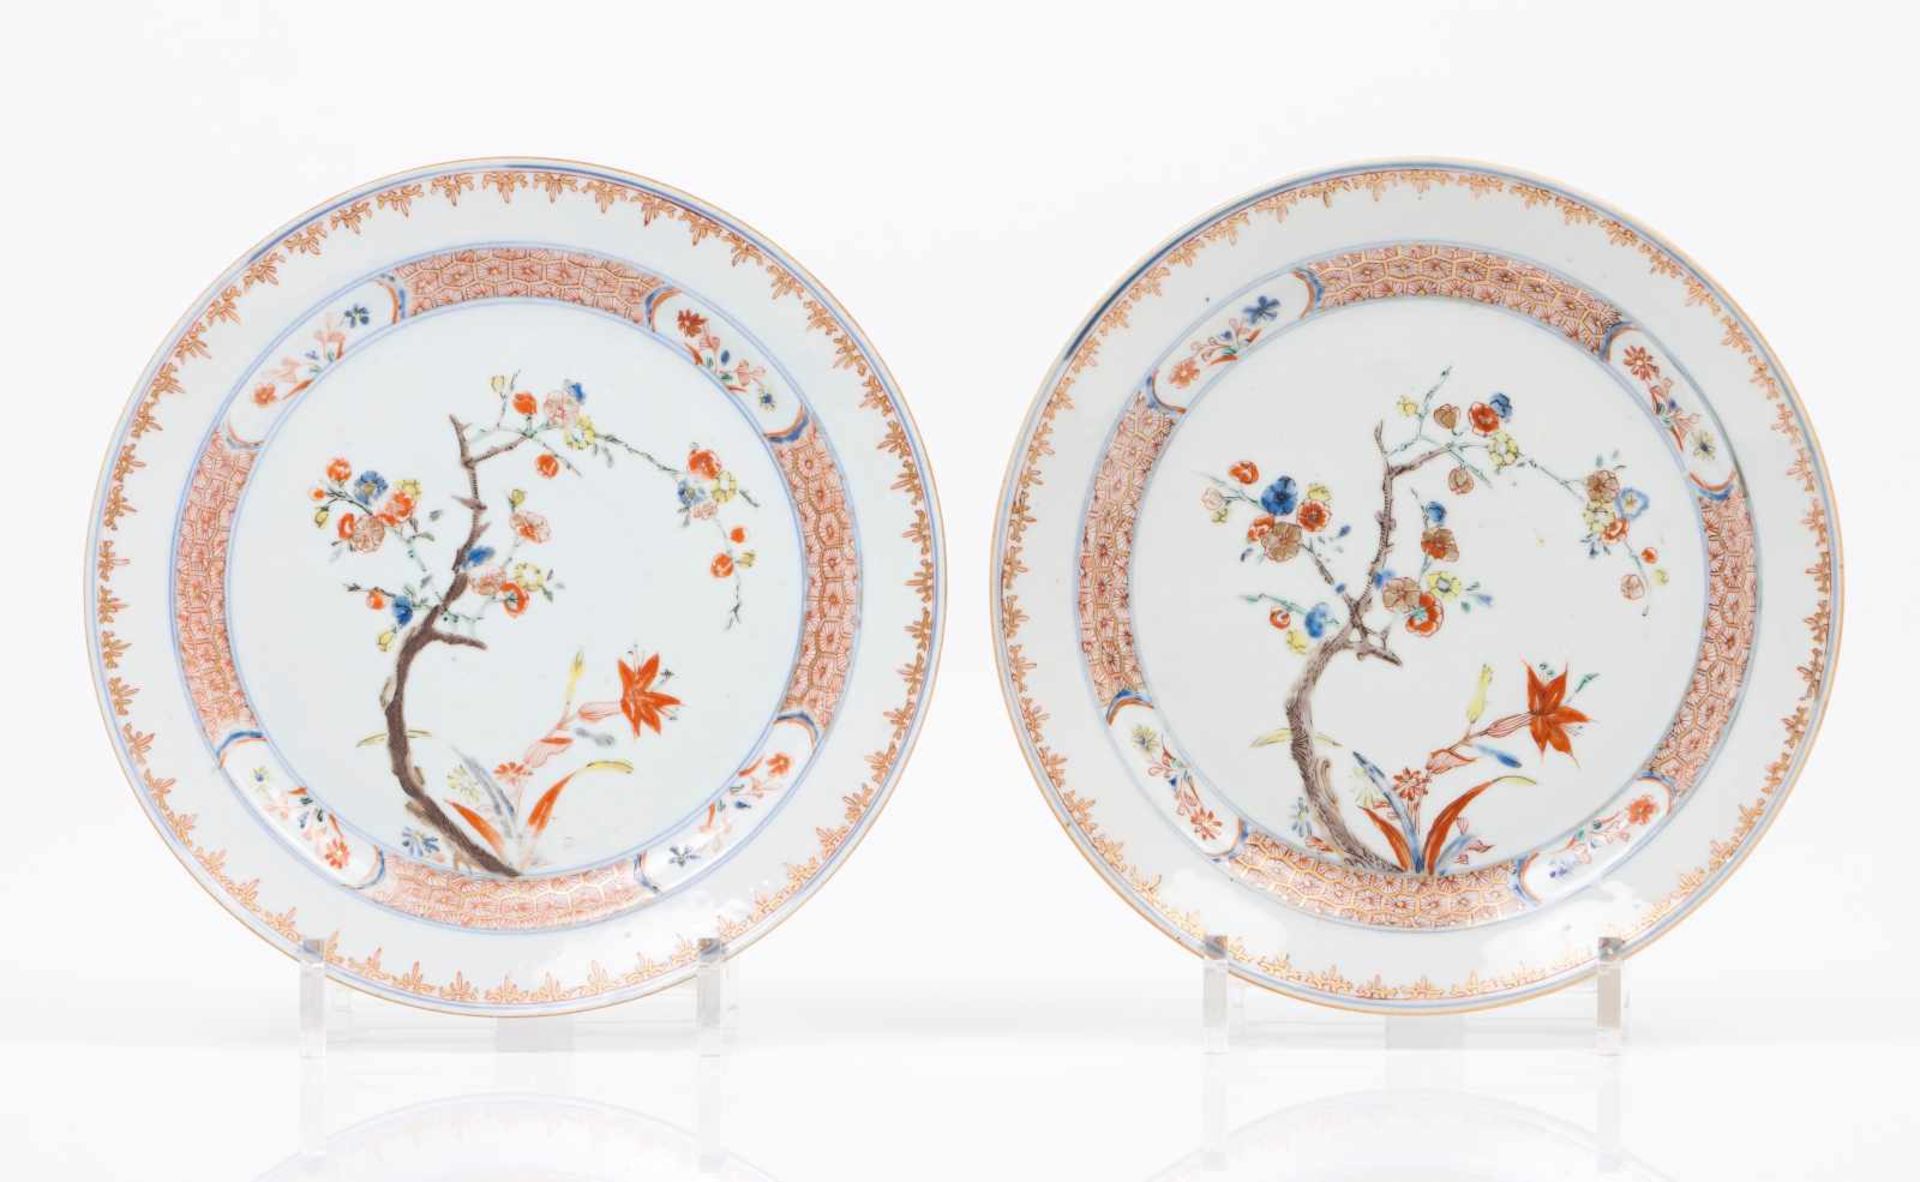 A pair of platesChinese export porcelainFloral trunk "Famille Rose" enamels decorationQianlong reign